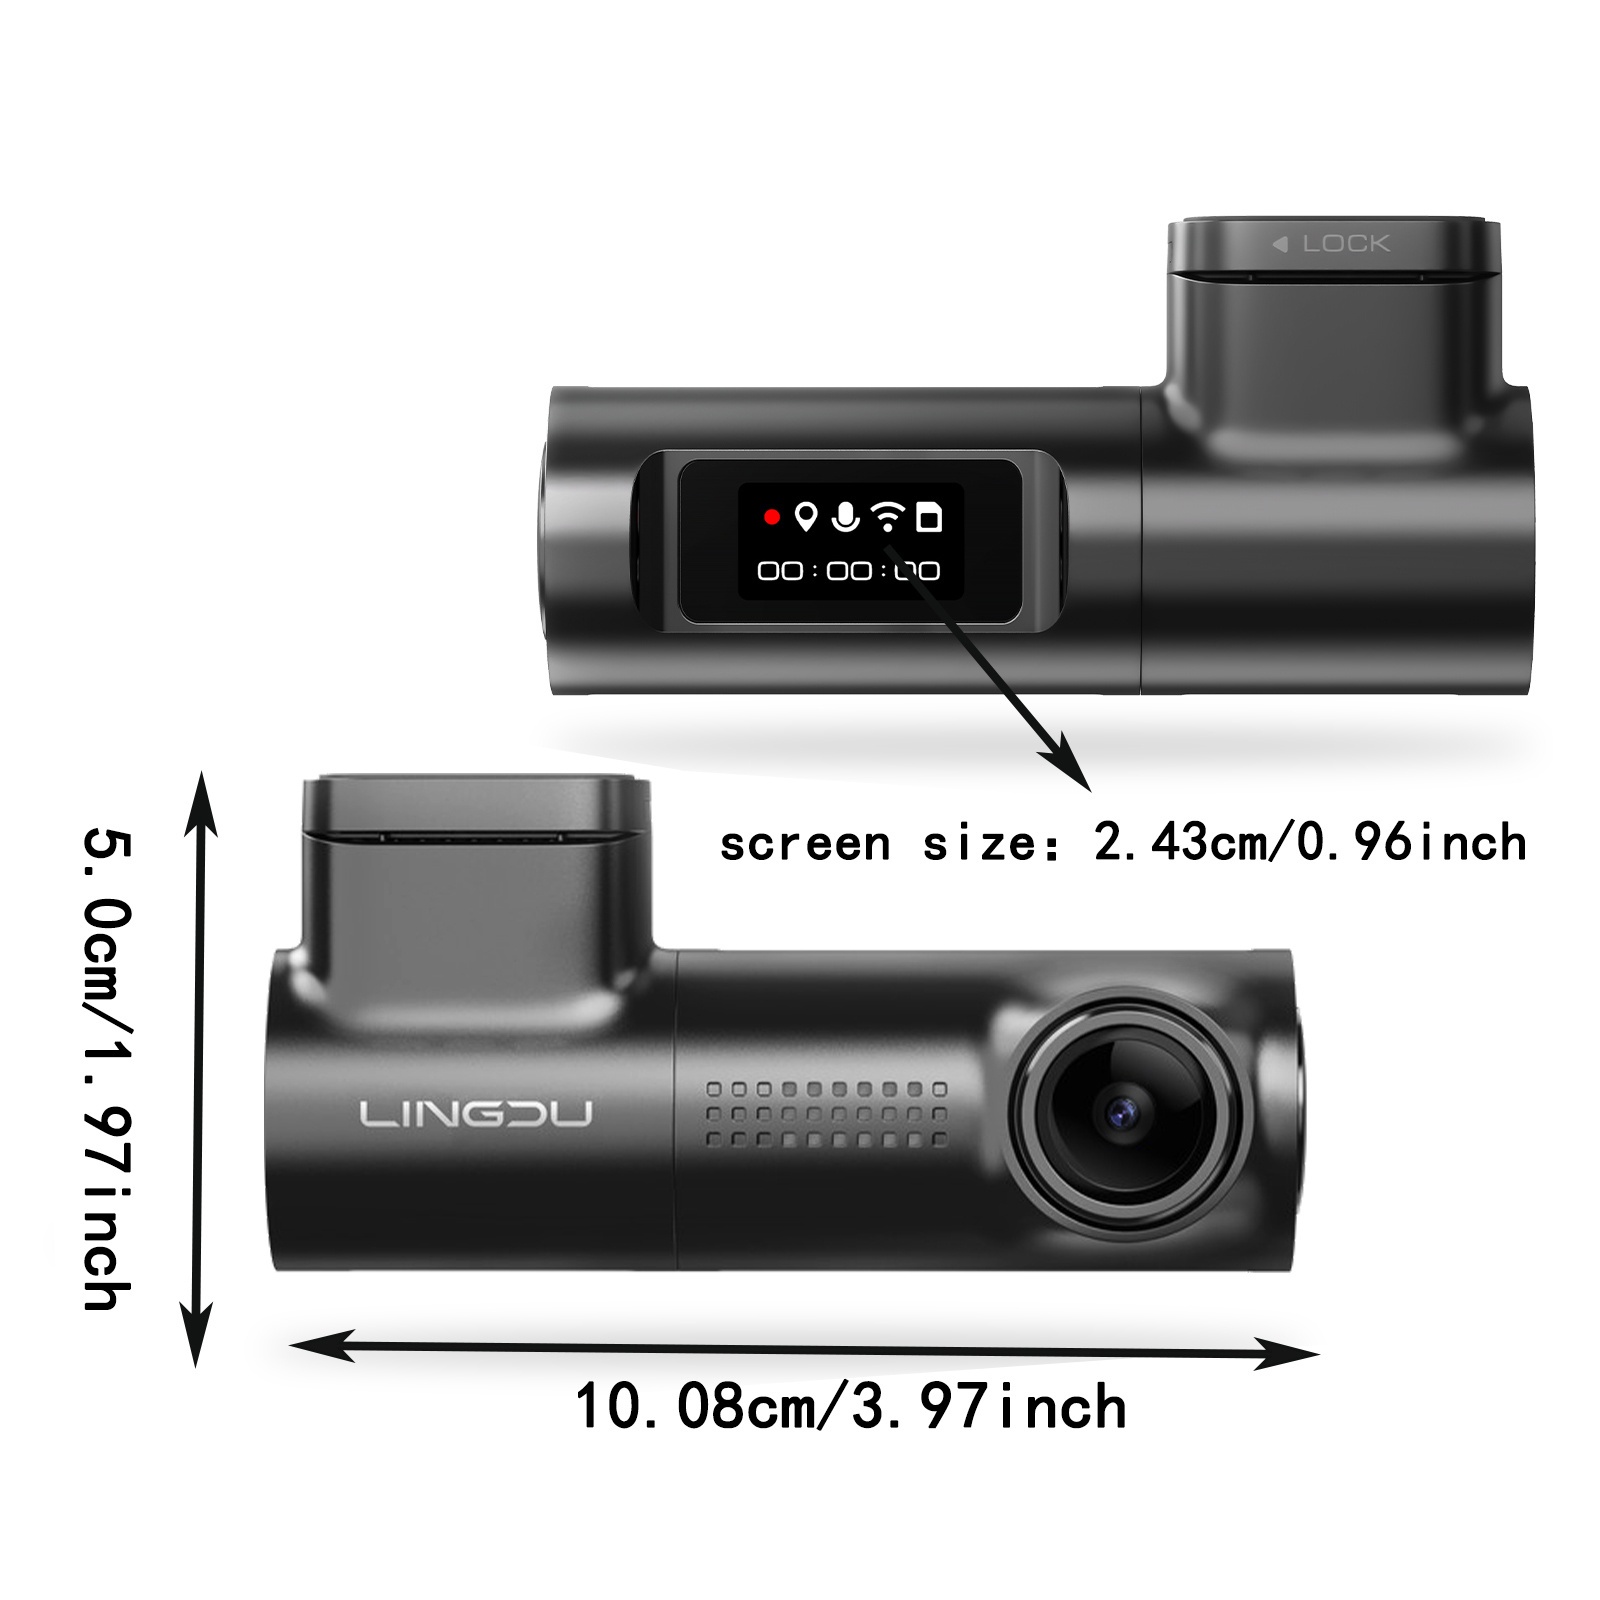 DDPAI Mini5 4K Dash Cam 2160P, 4K UHD Dash Cam Recorder 3840x2160P, Built  in 5G